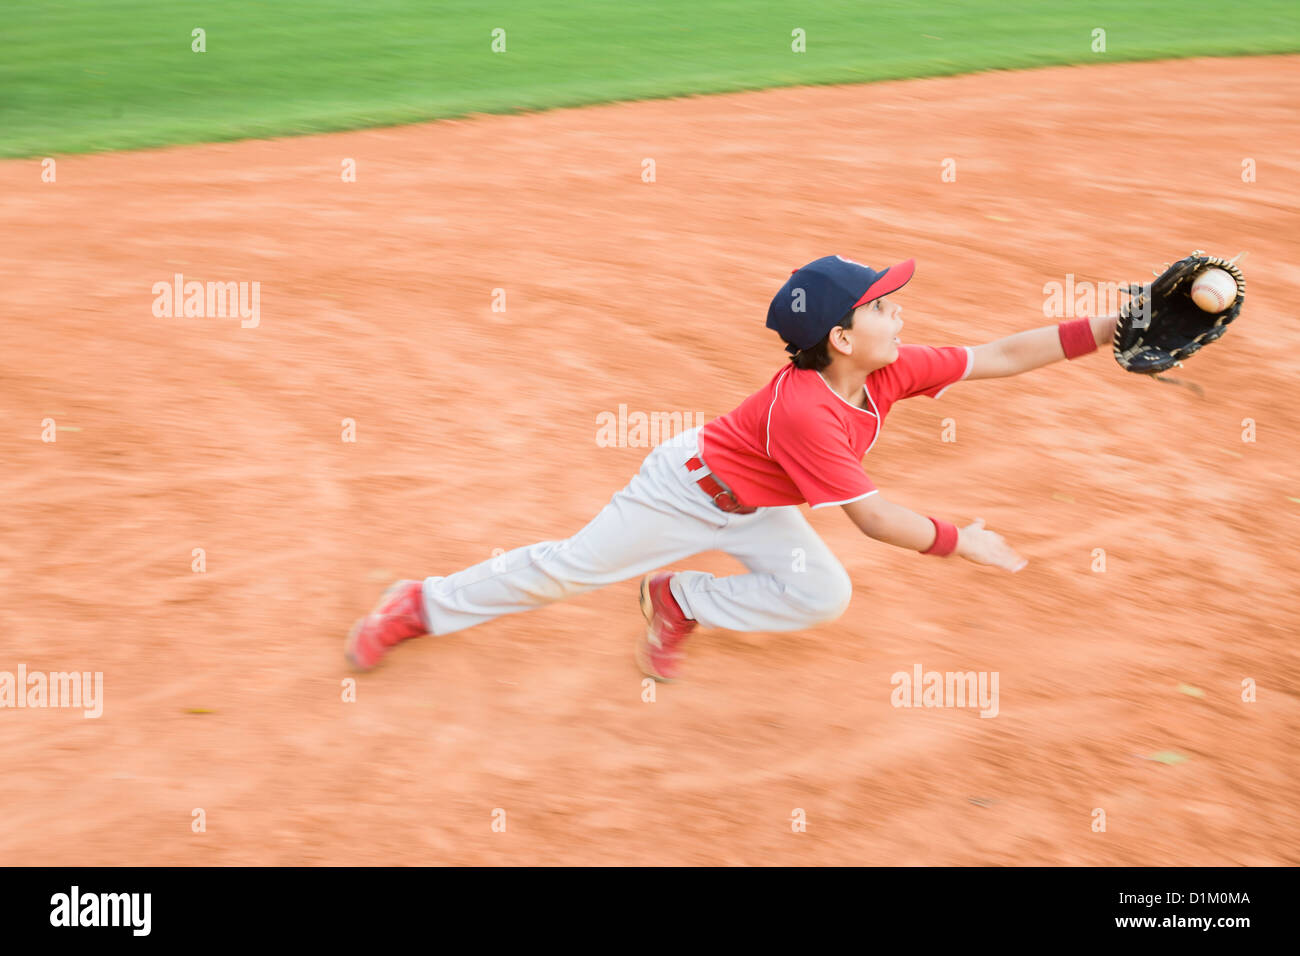 Hispanic baseball player catching ball Stock Photo